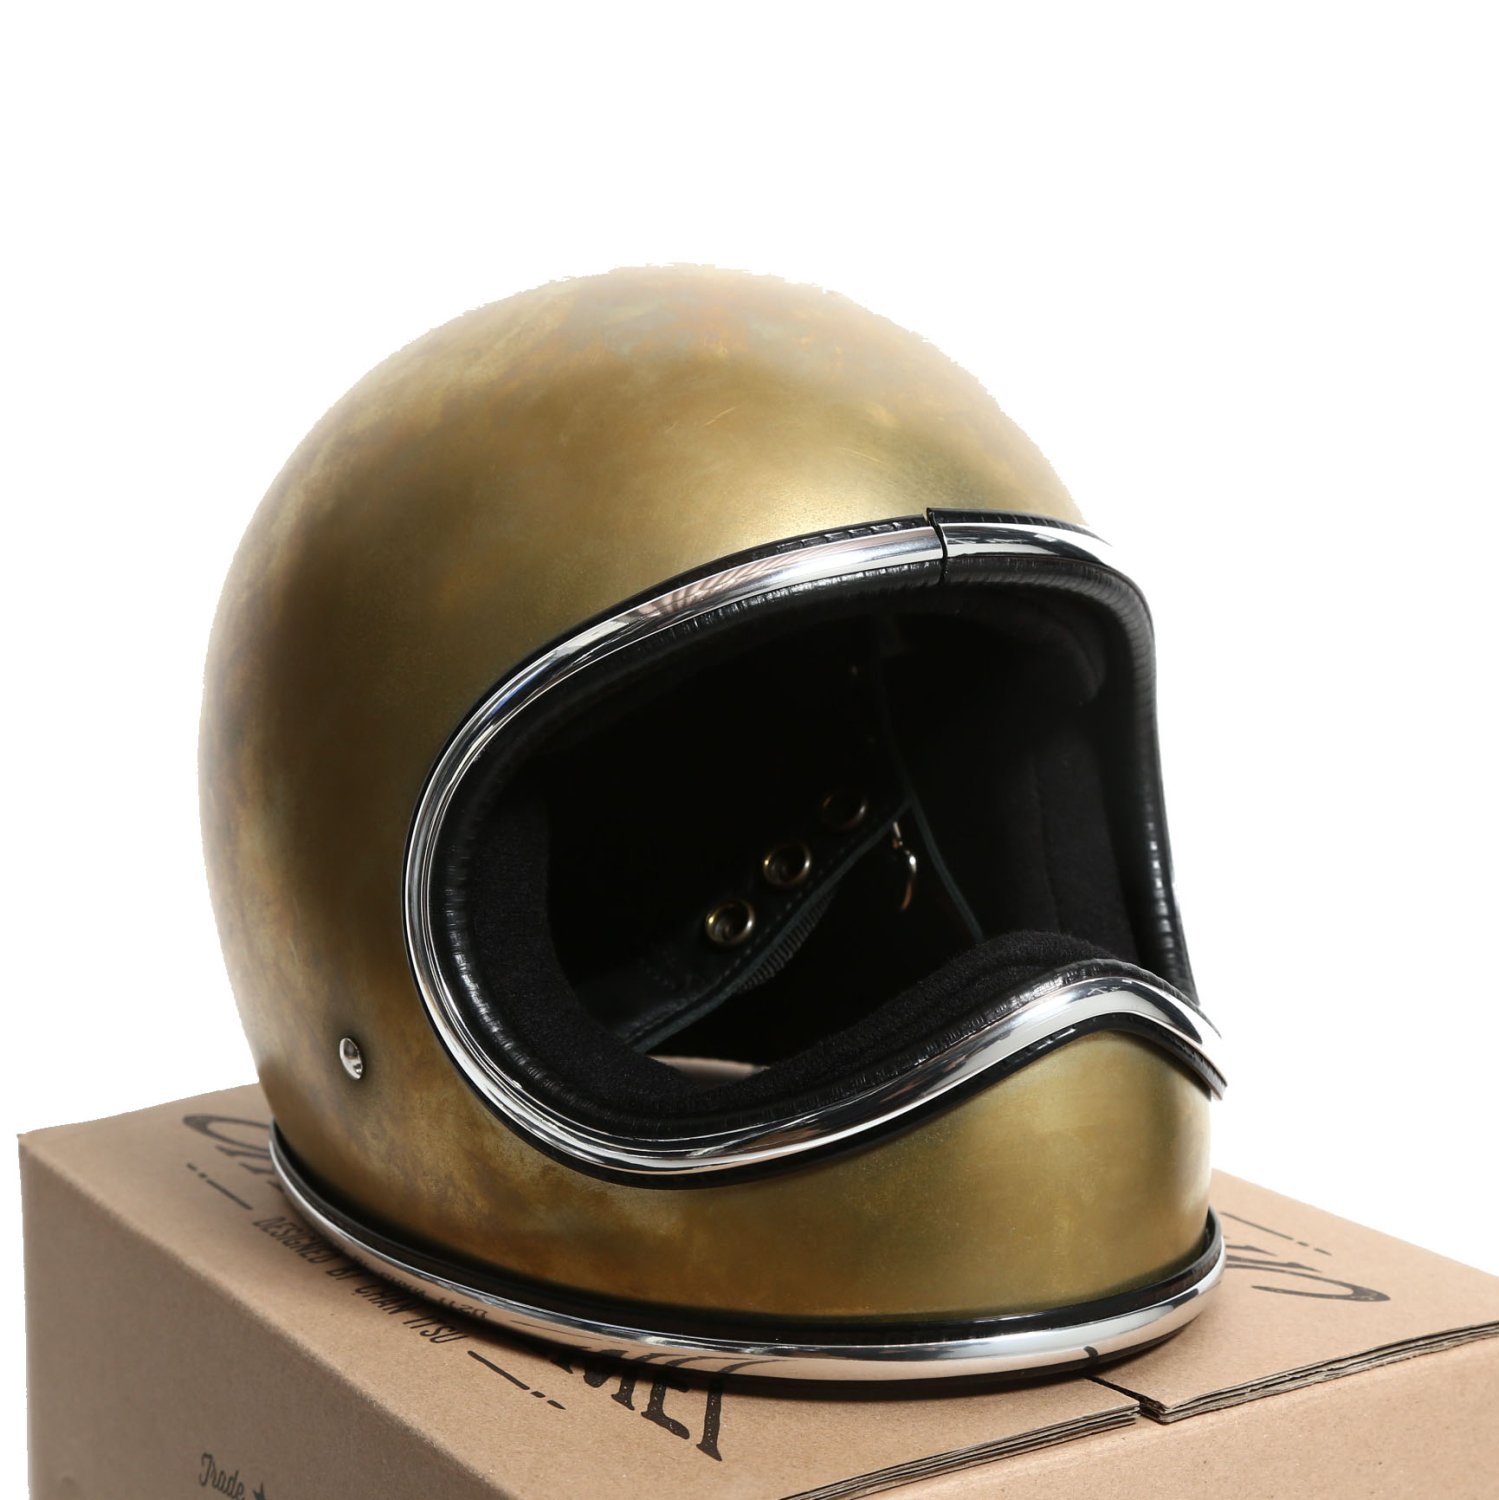 Nobudz Space Helmet Ver.2 スペースヘルメット希望金額は35000円です